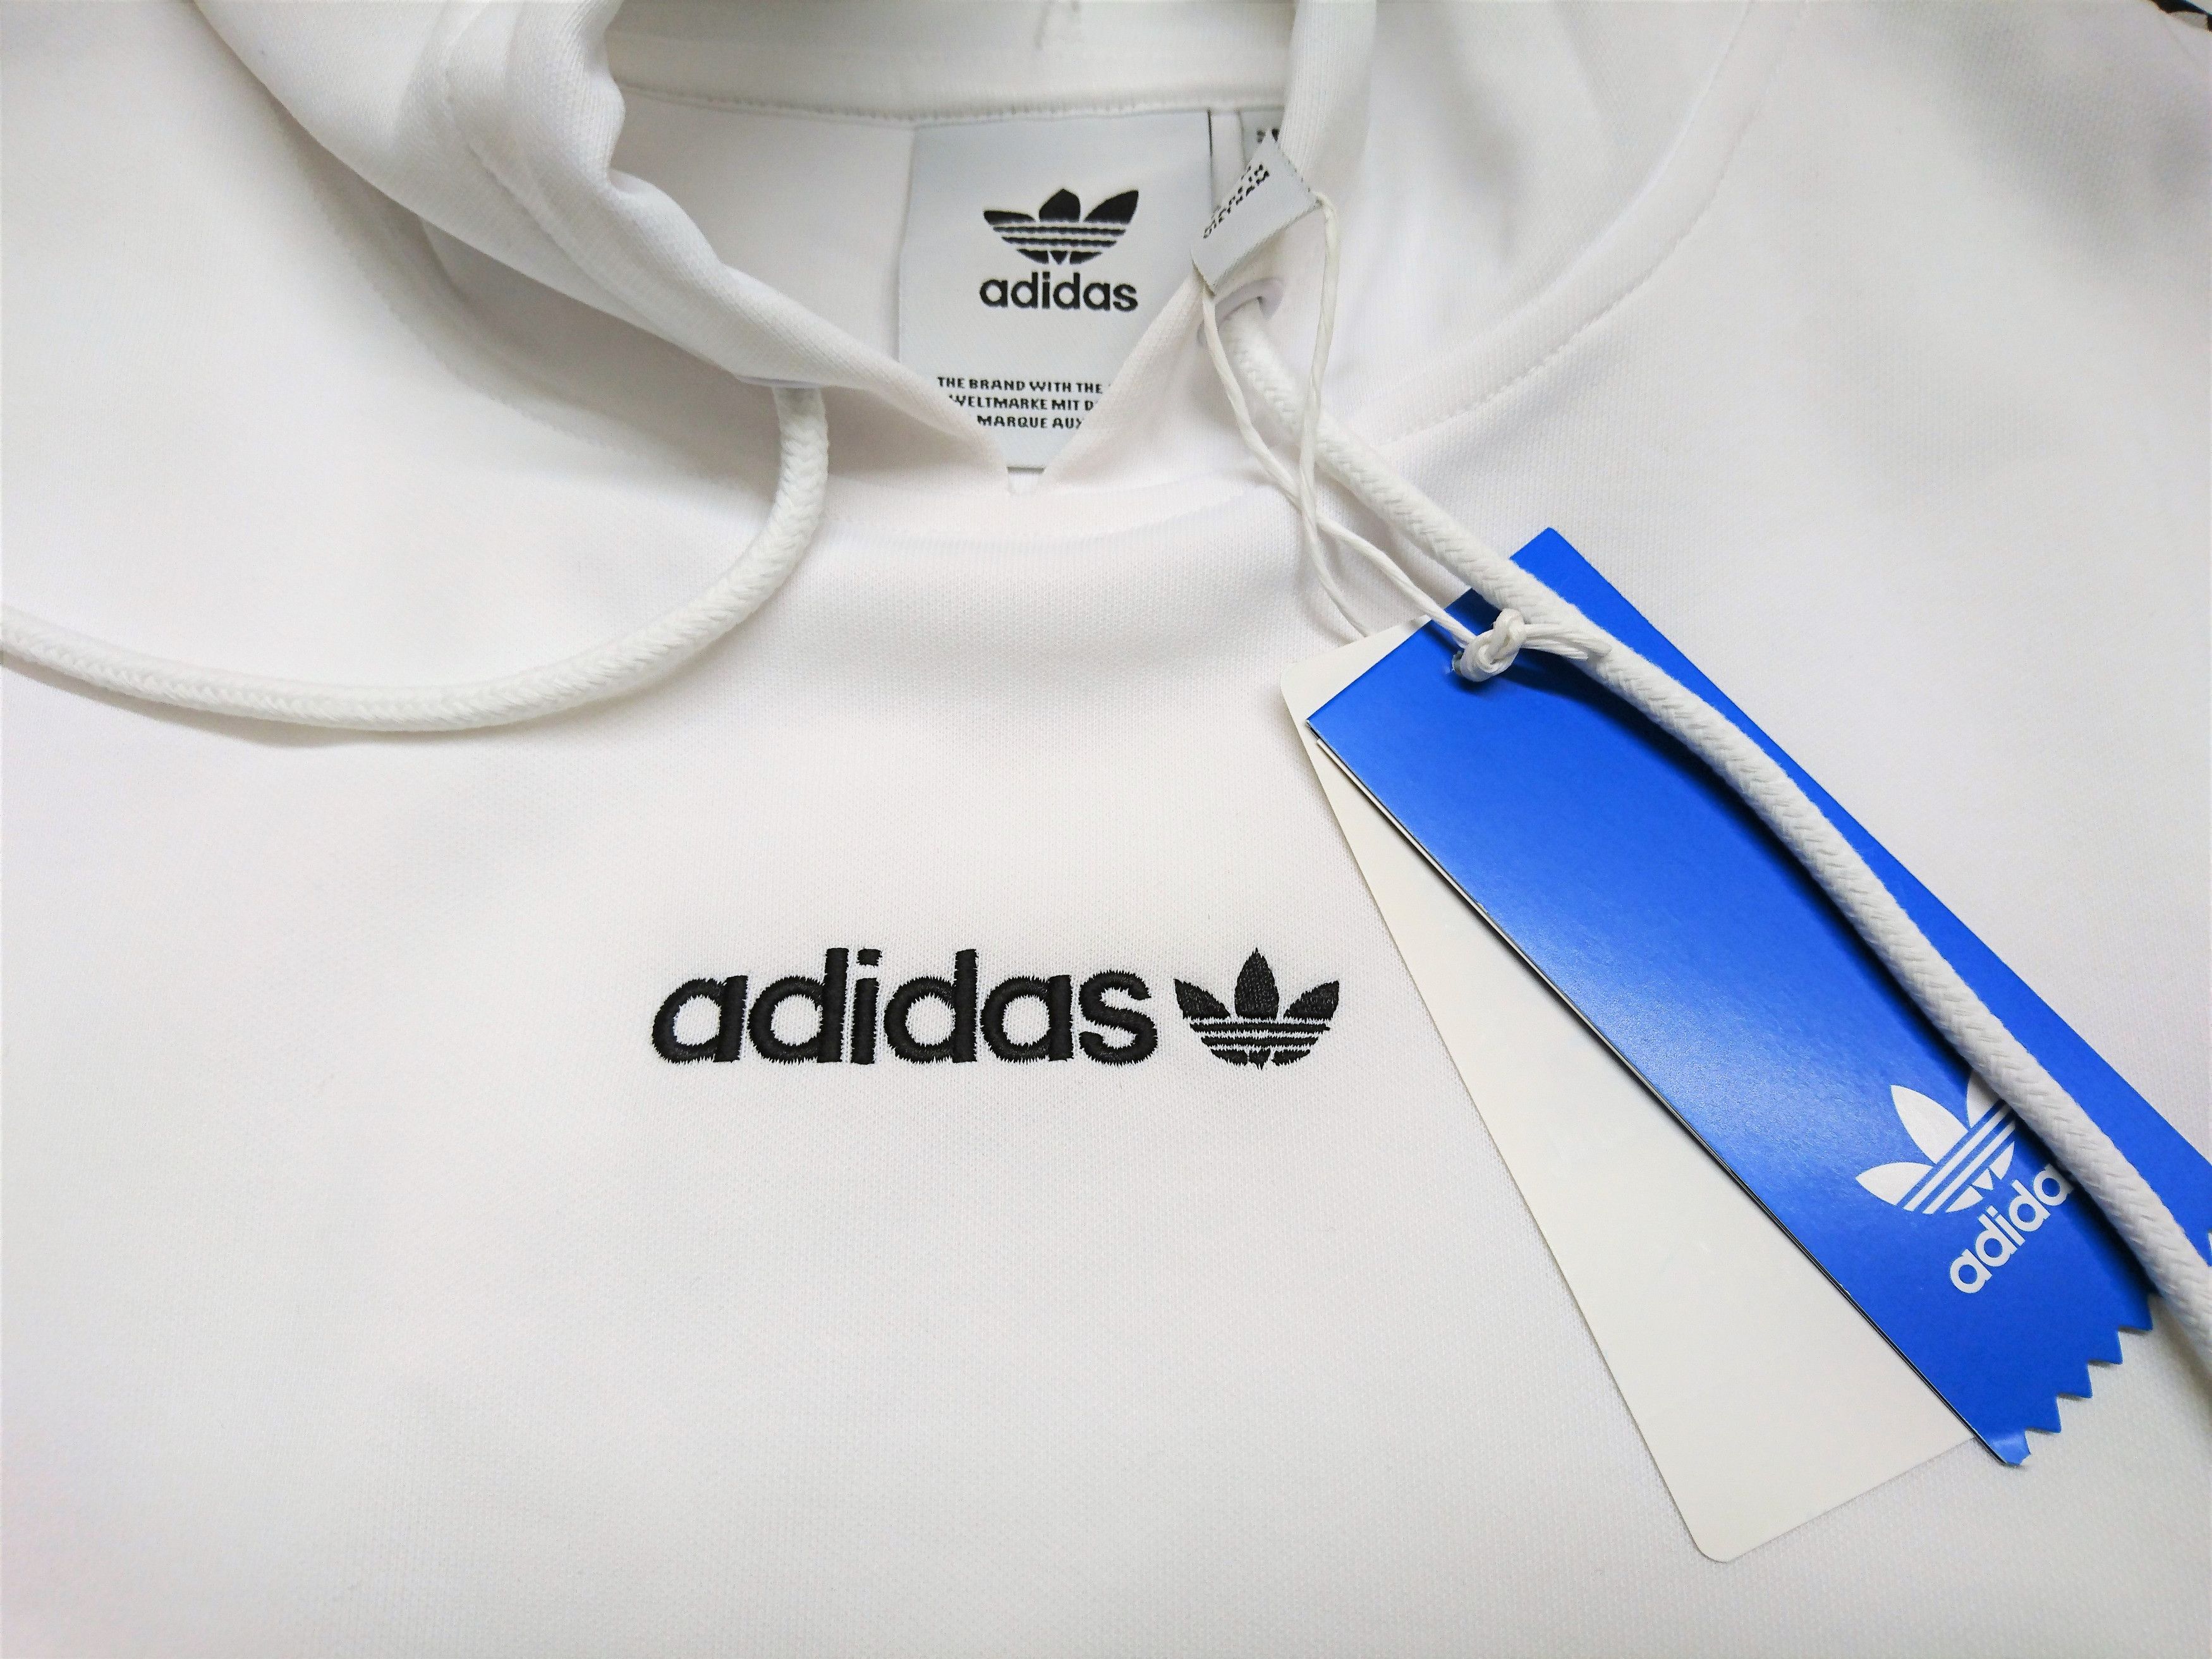 Adidas Adidas Originals TNT Tape pullover hoodie Size US M / EU 48-50 / 2 - 7 Thumbnail